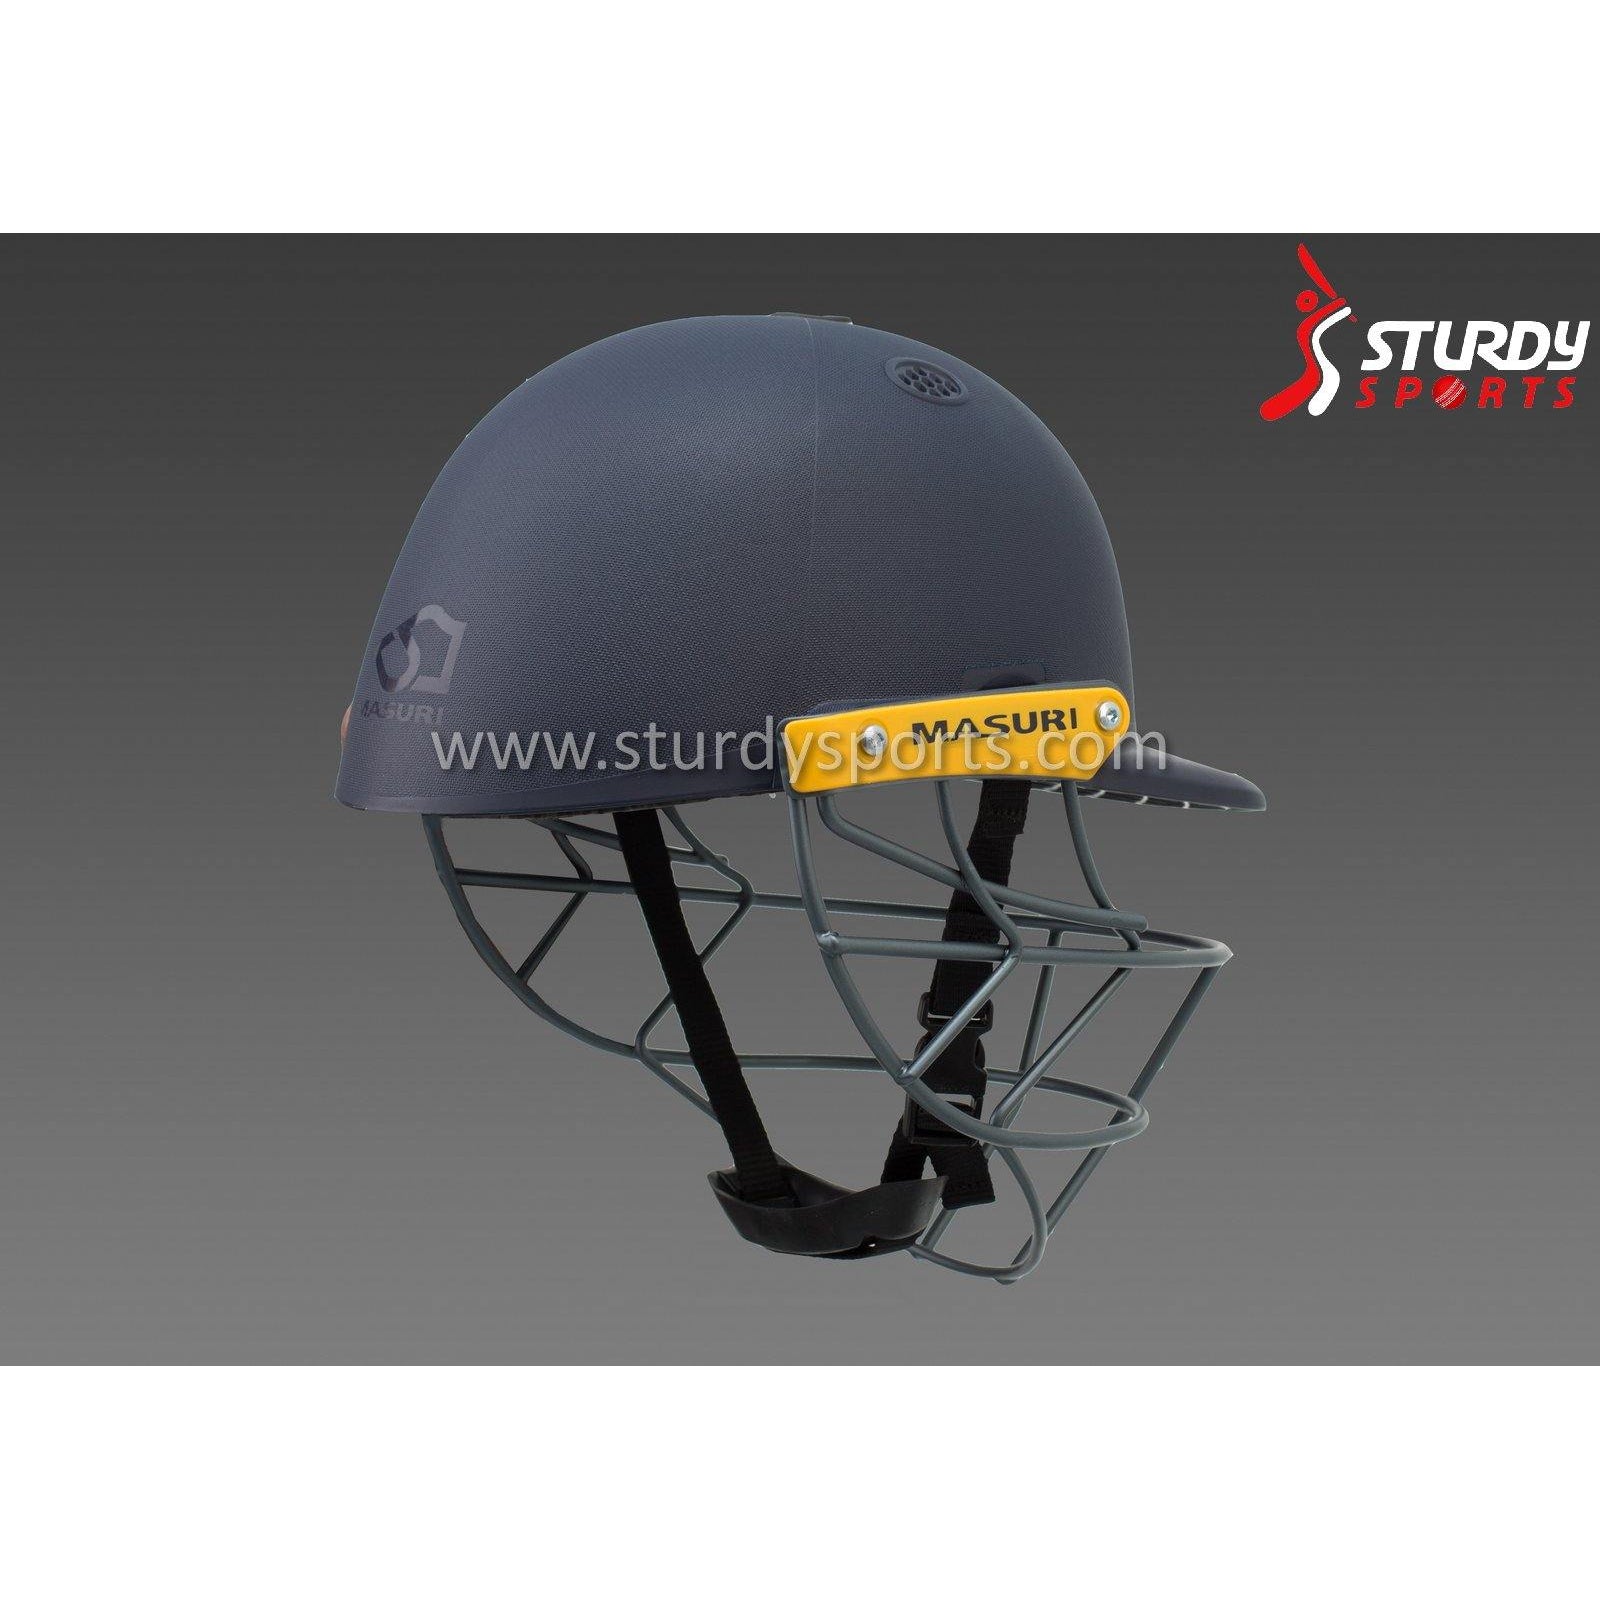 Masuri C Line Cricket Helmet without Adjuster - Junior Small